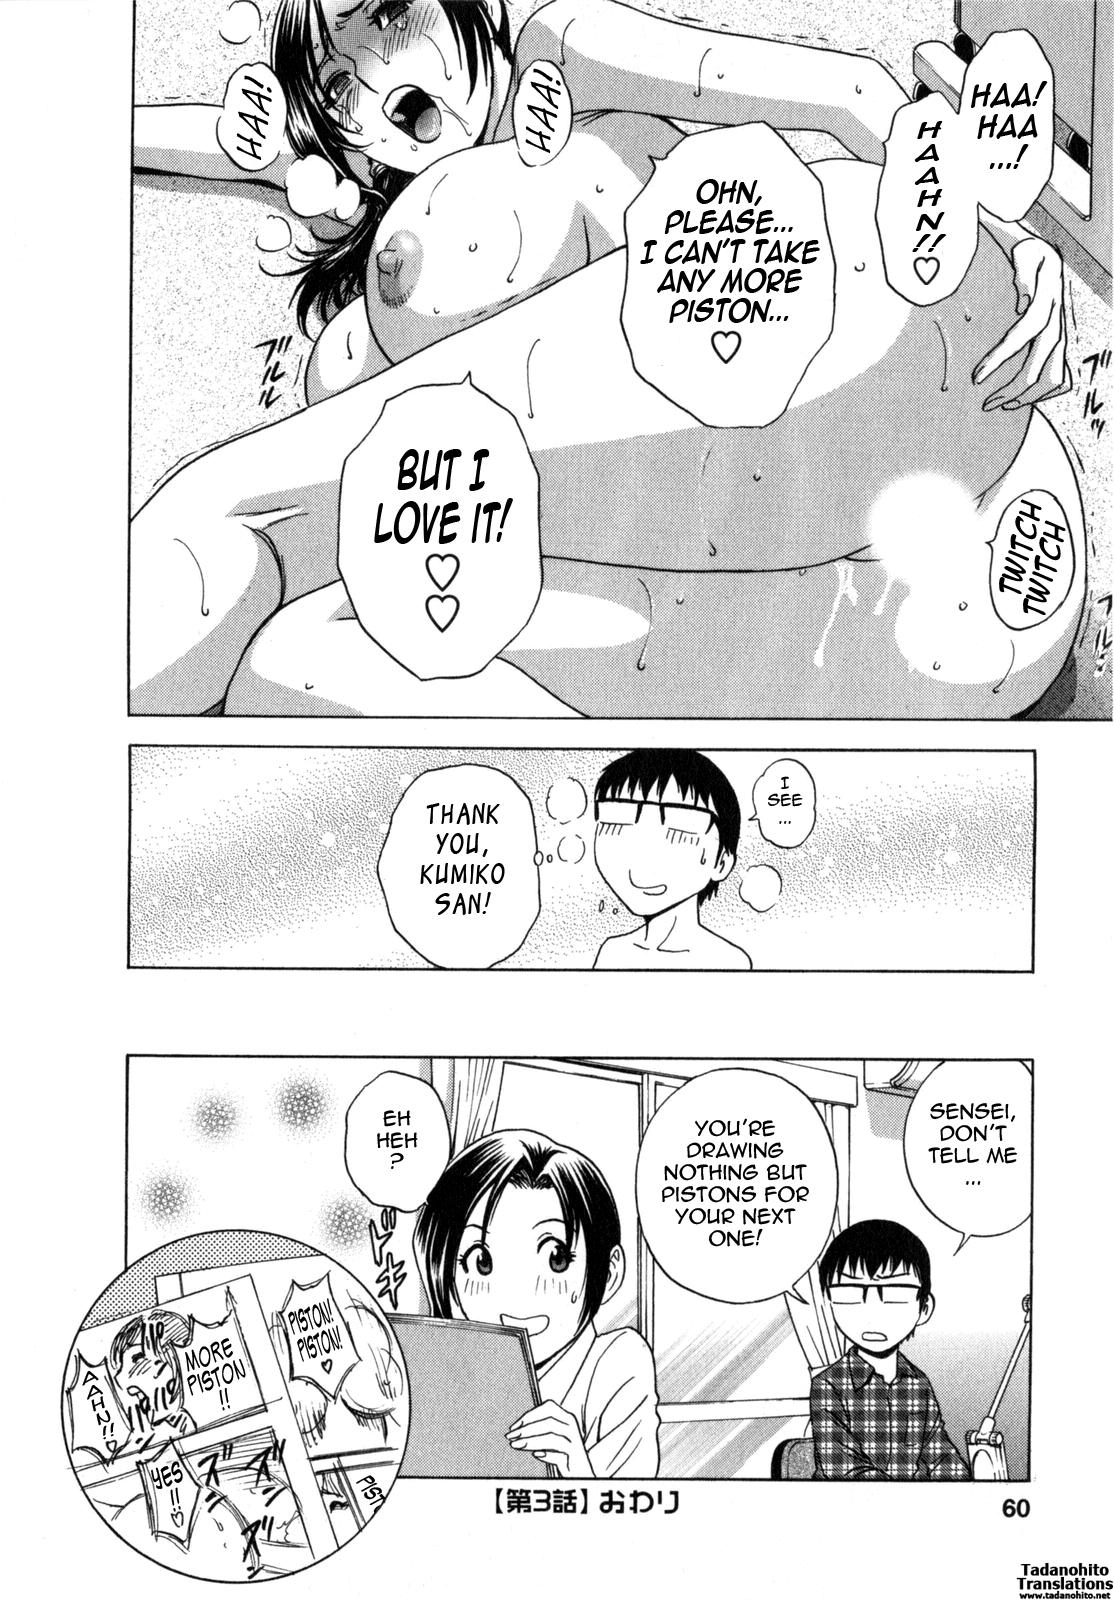 [Hidemaru] Life with Married Women Just Like a Manga 1 - Ch. 1-9 [English] {Tadanohito} 62